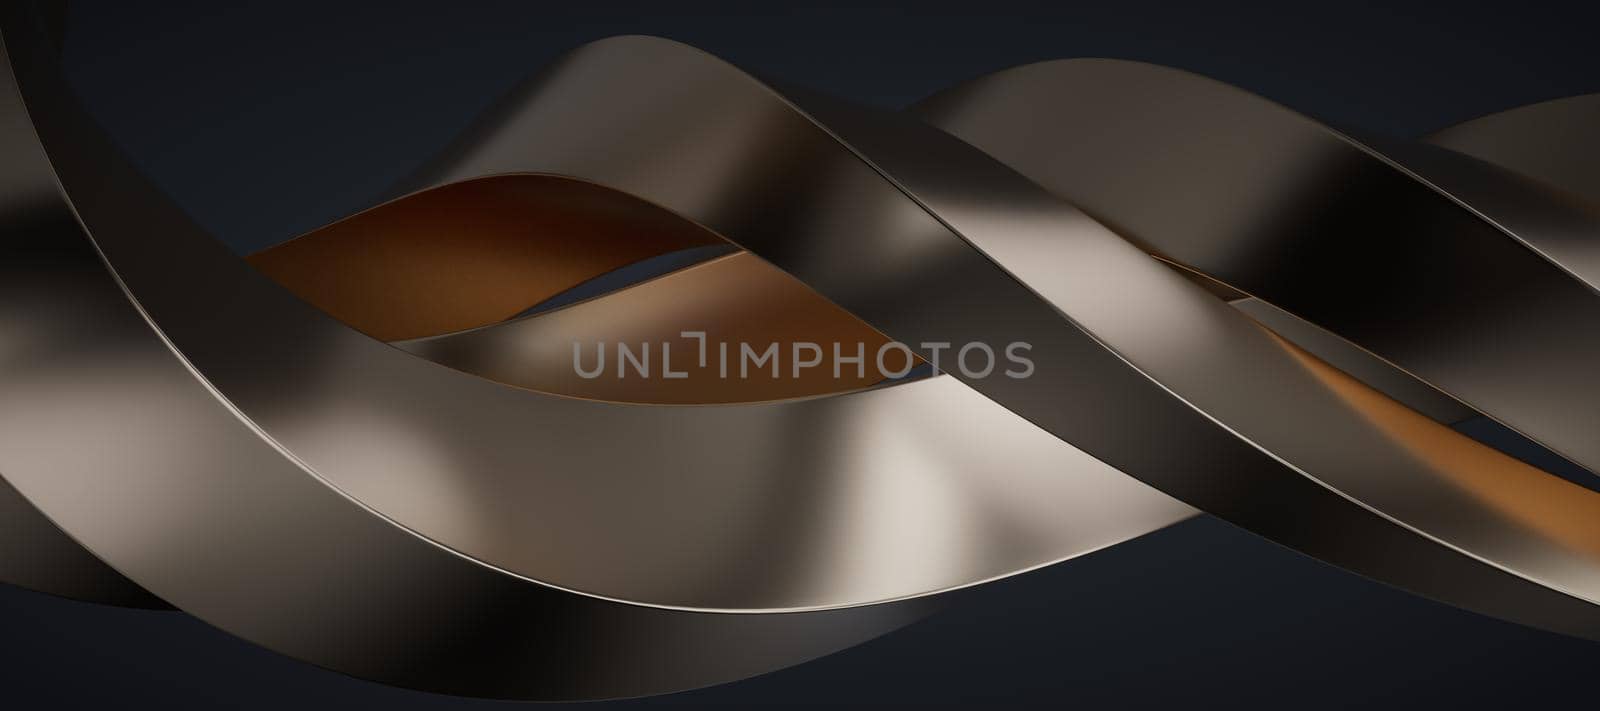 Metallic curve geometry background, 3d rendering. by vinkfan